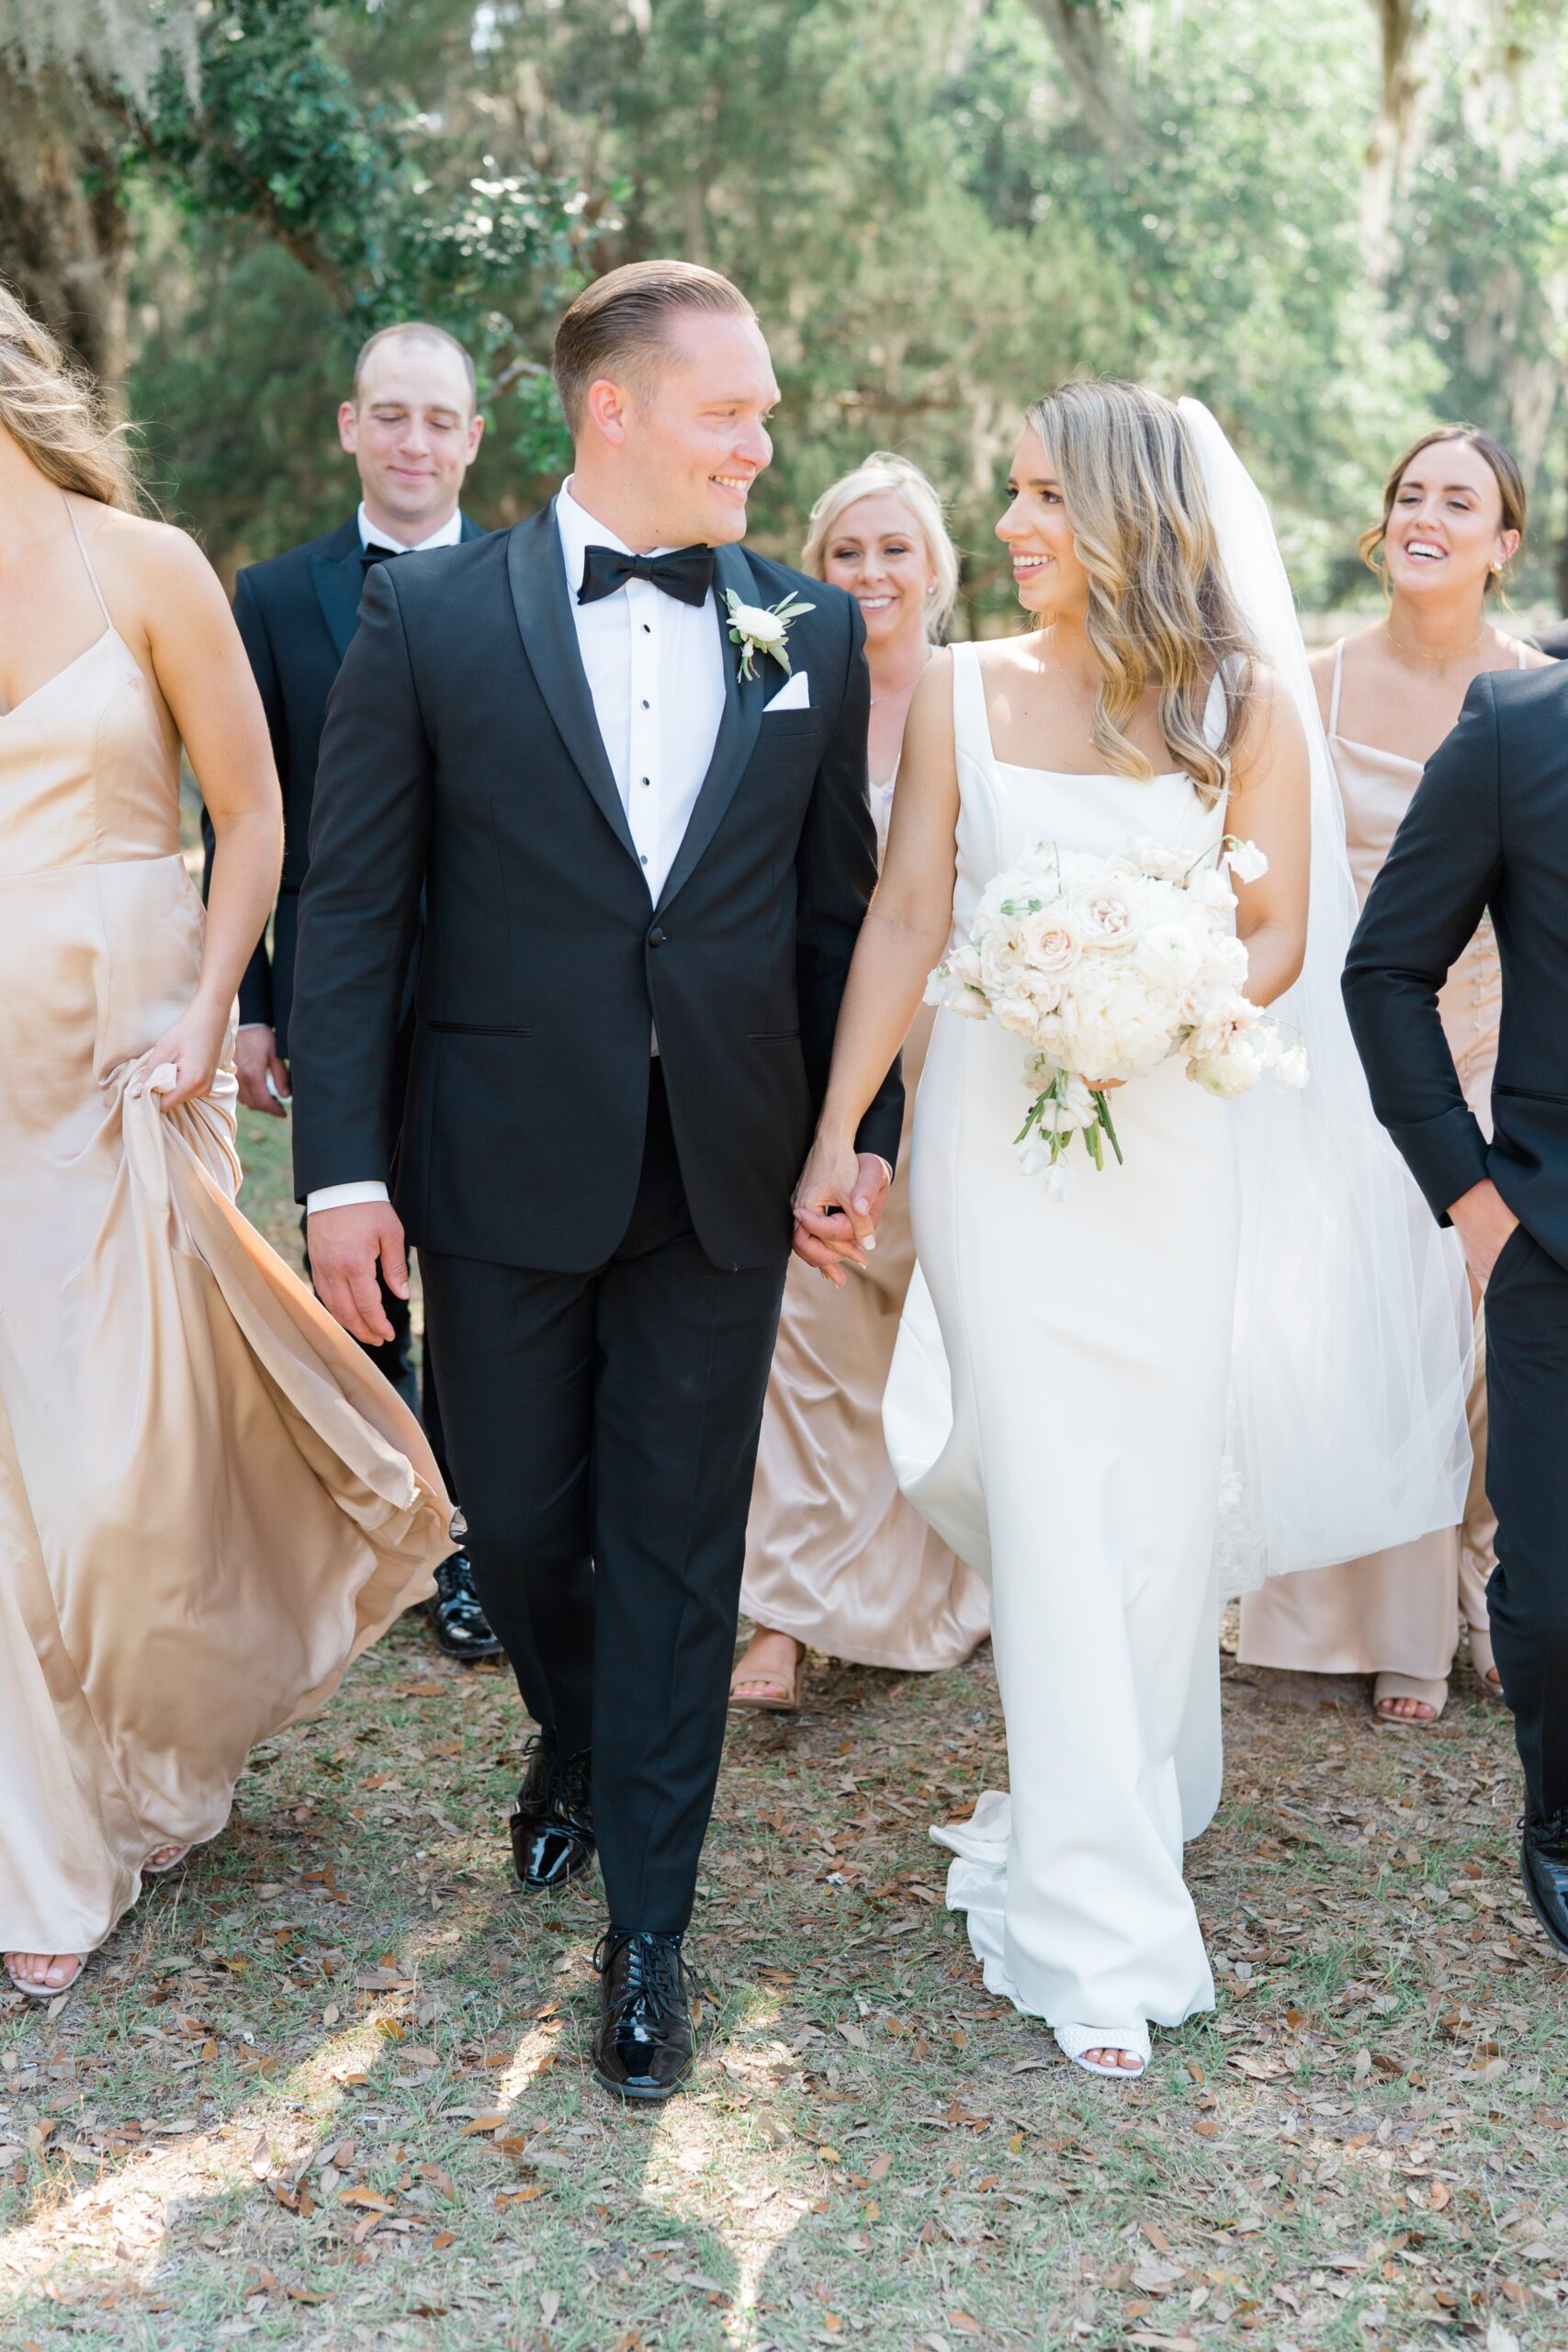 Bride and groom walk with bridal party at Charleston spring wedding.